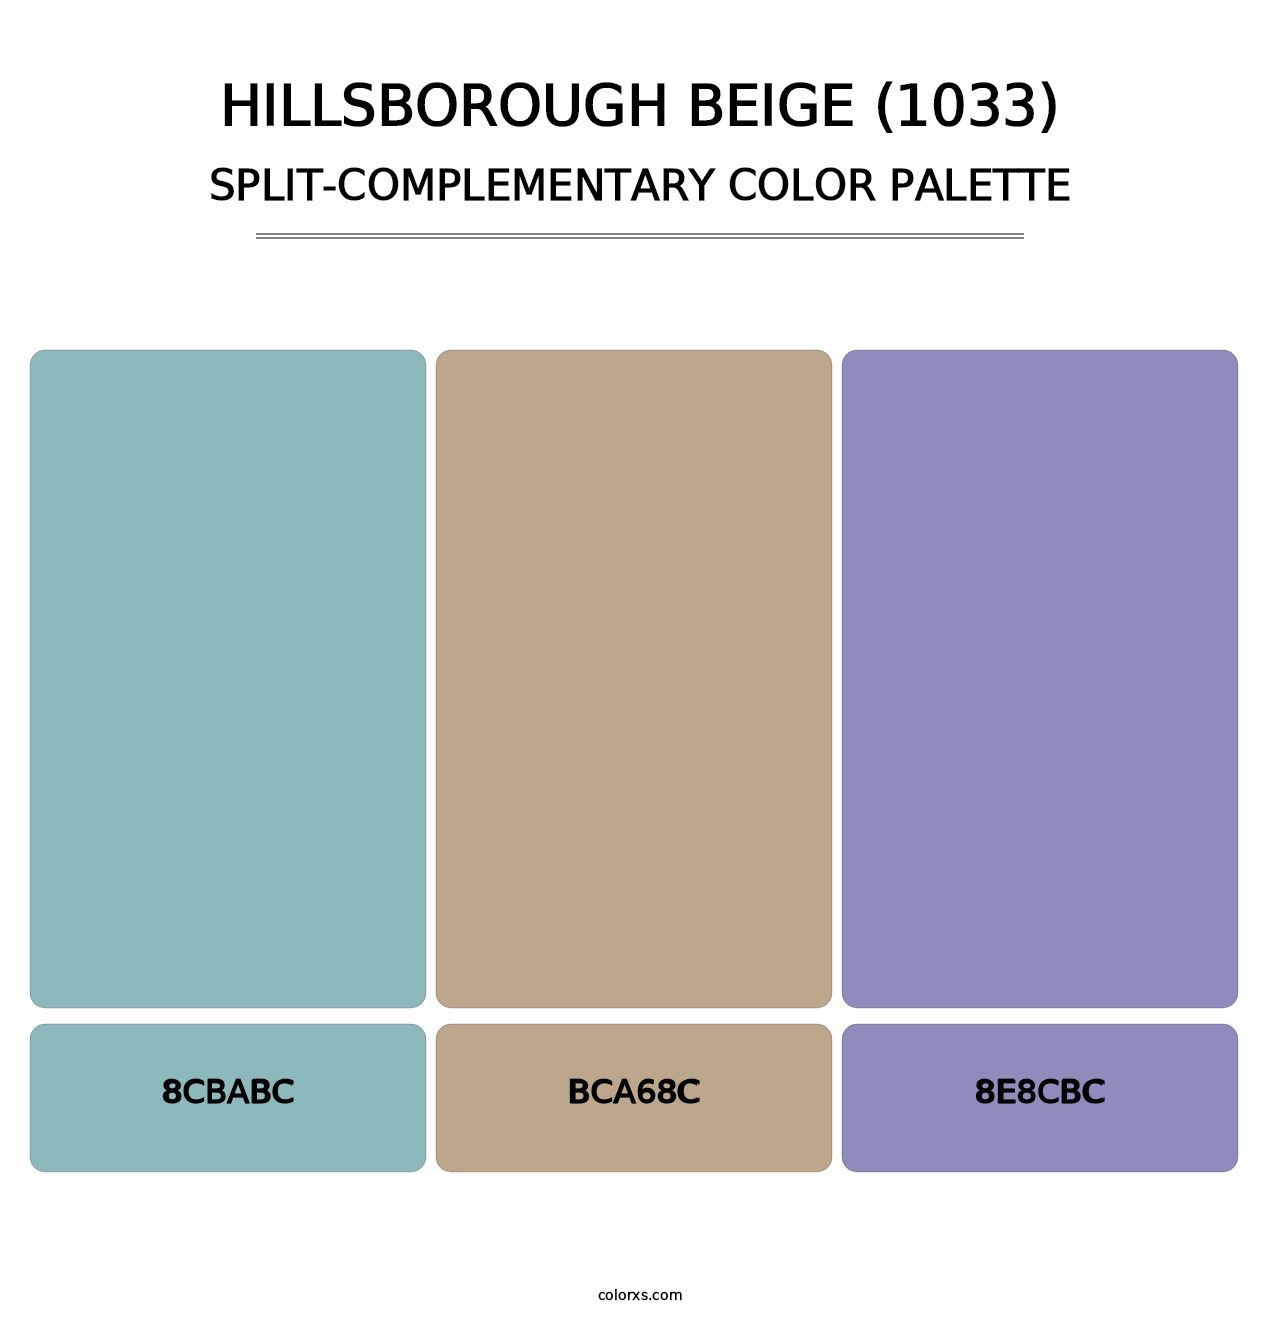 Hillsborough Beige (1033) - Split-Complementary Color Palette